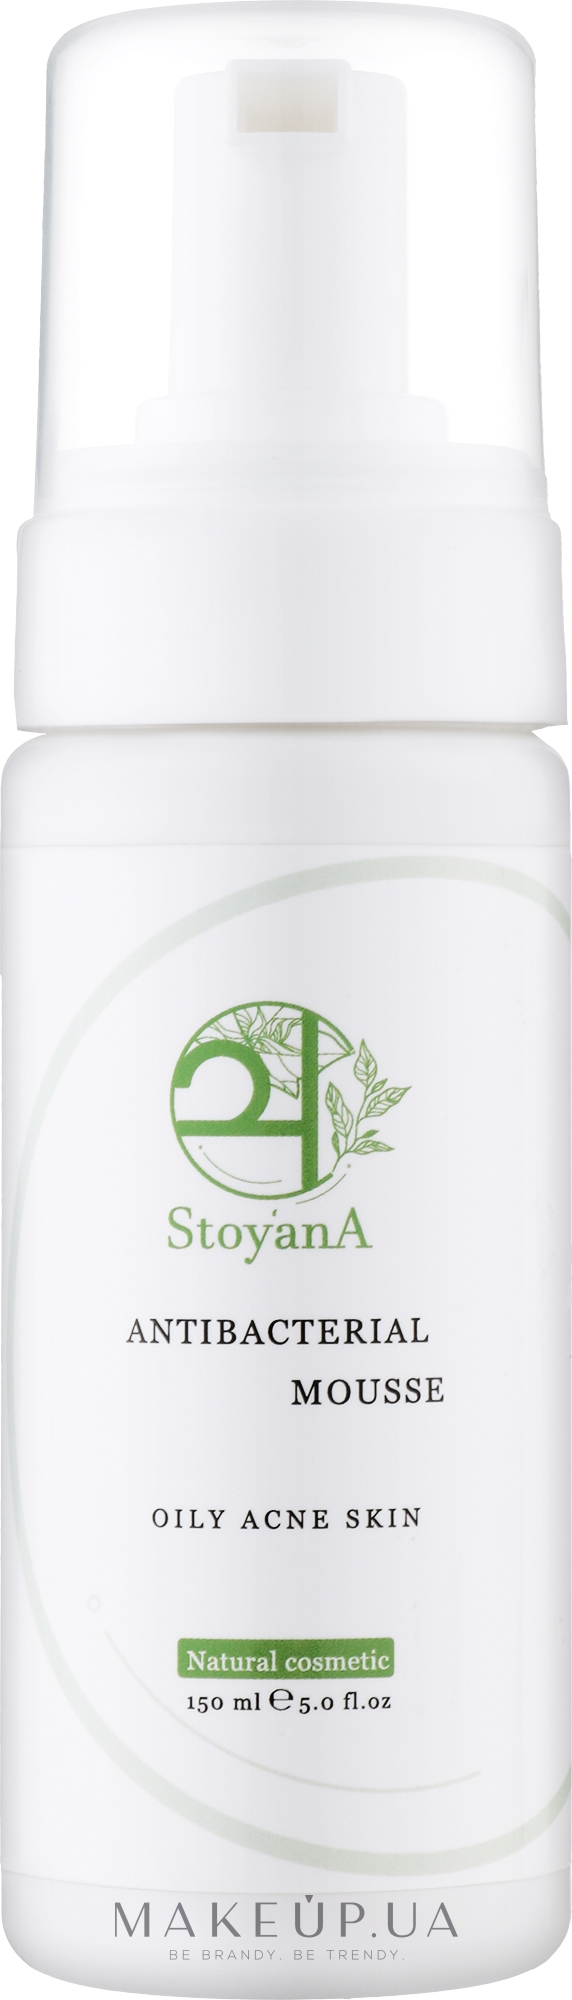 Антибактеріальний мус для обличчя - StoyanA Antibacterial Mousse Oily Acne Skin — фото 150ml